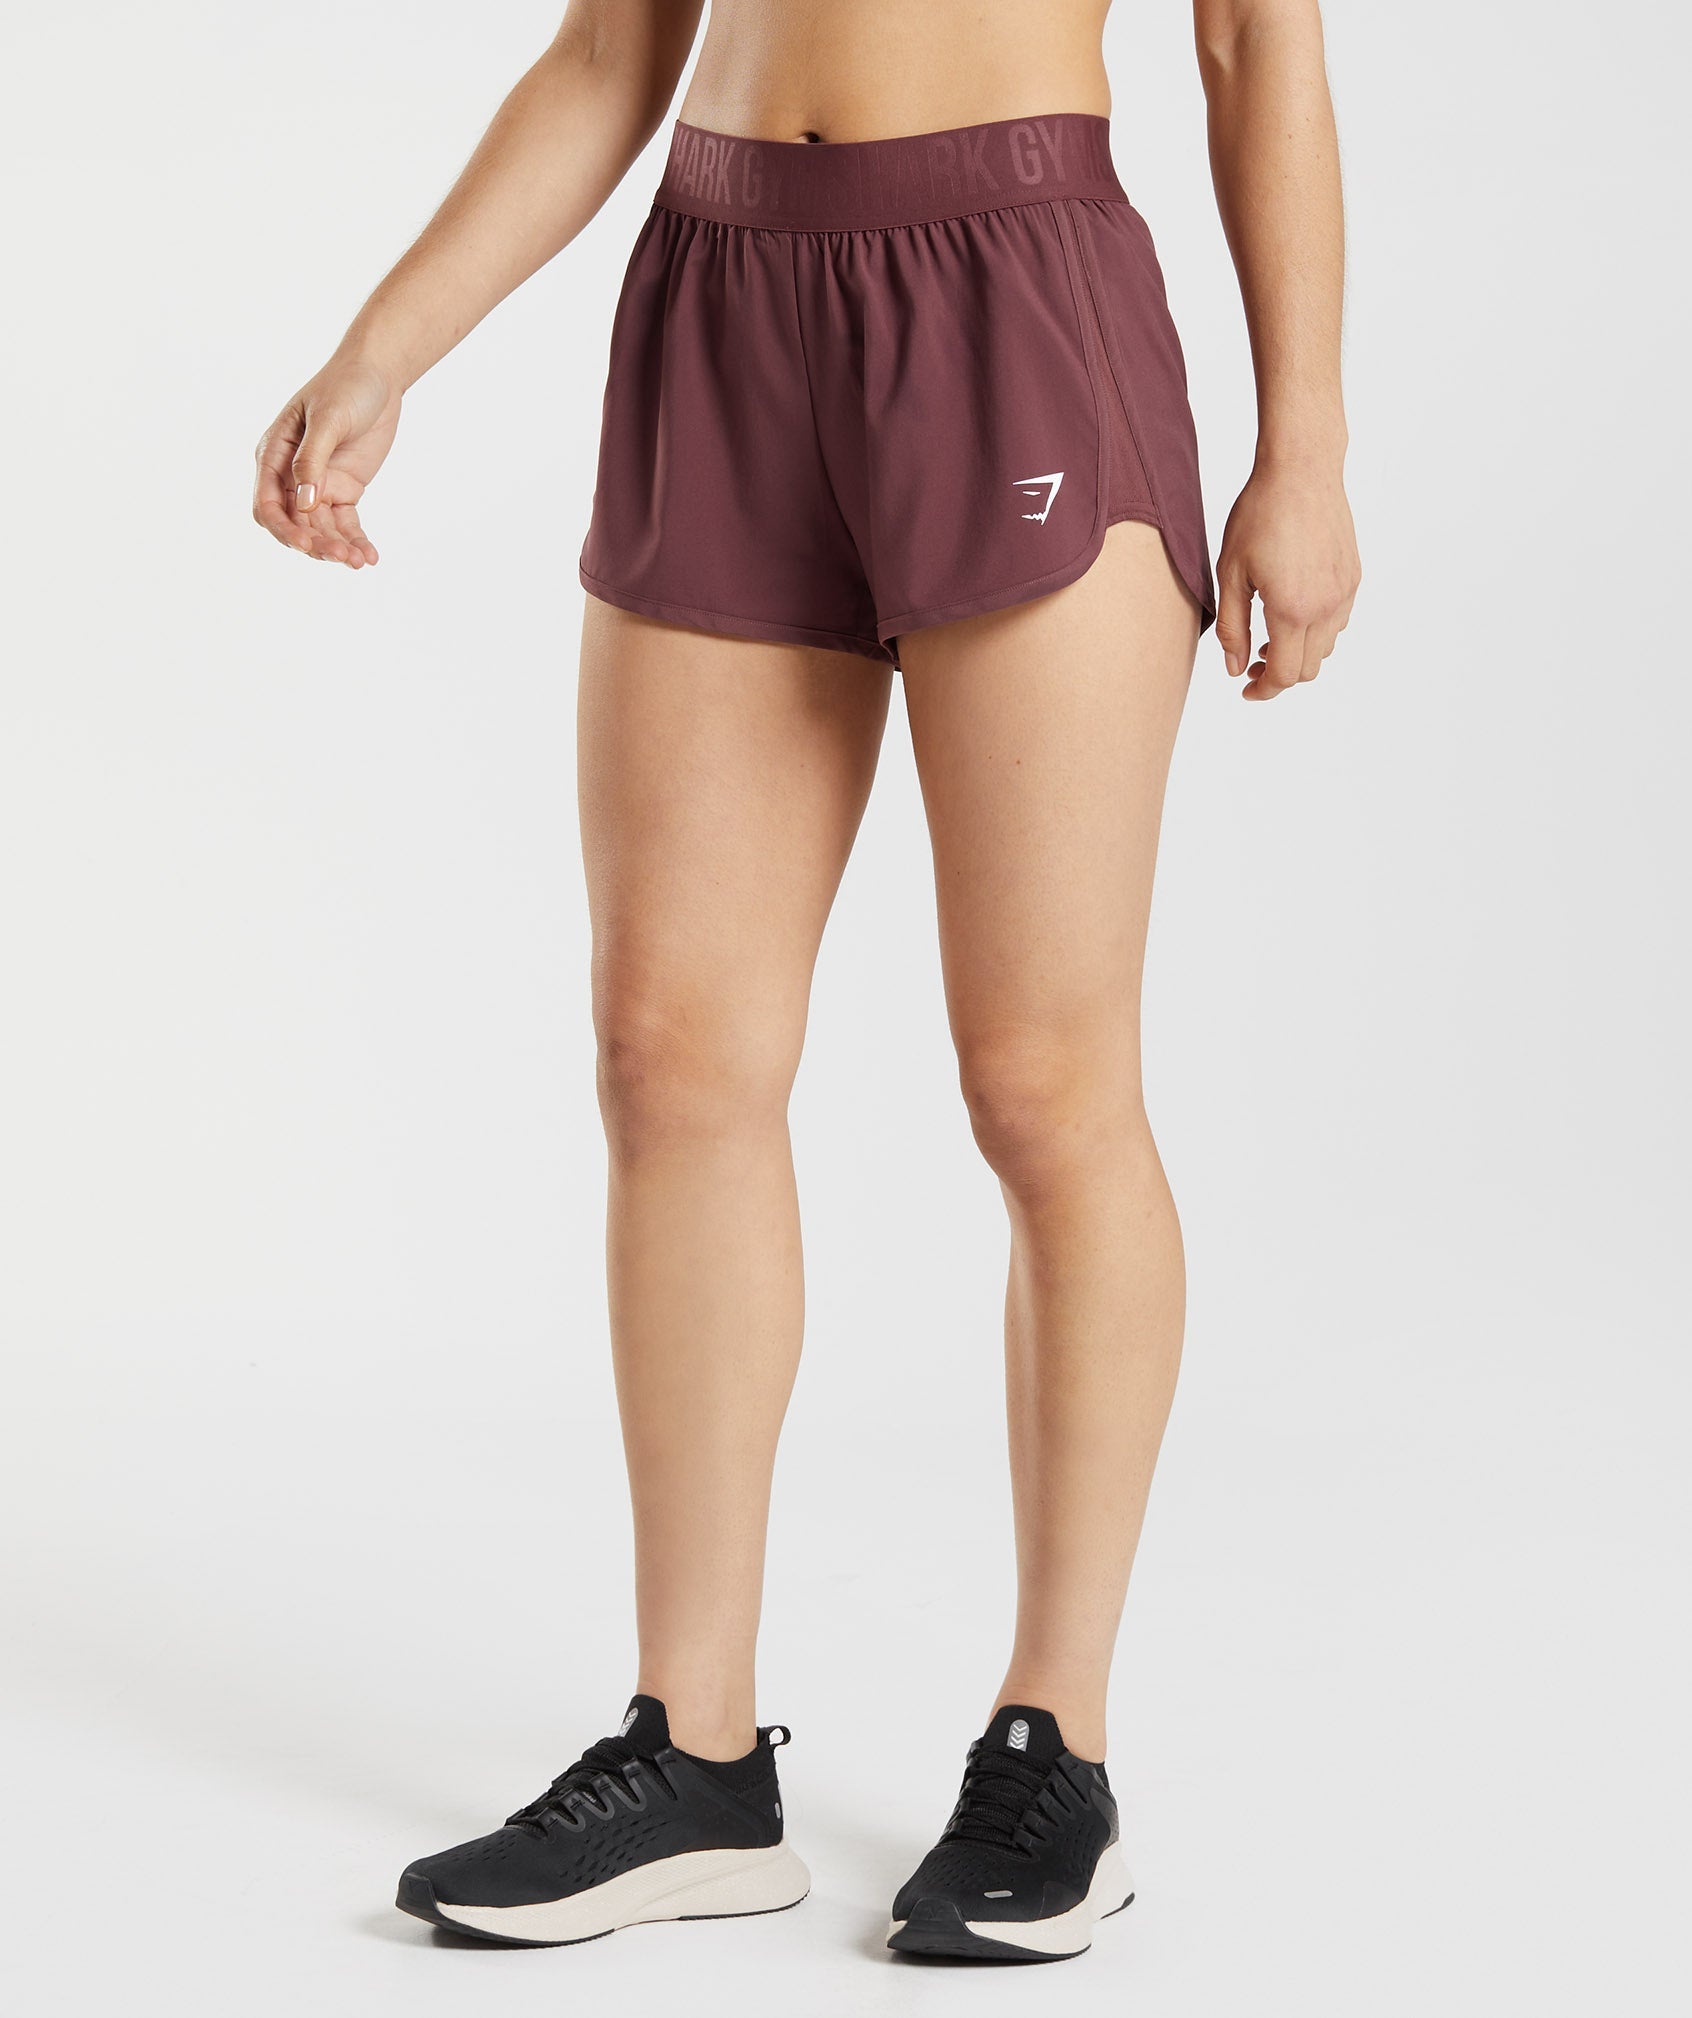 Women's 2 Inch Workout & Gym Shorts - Gymshark